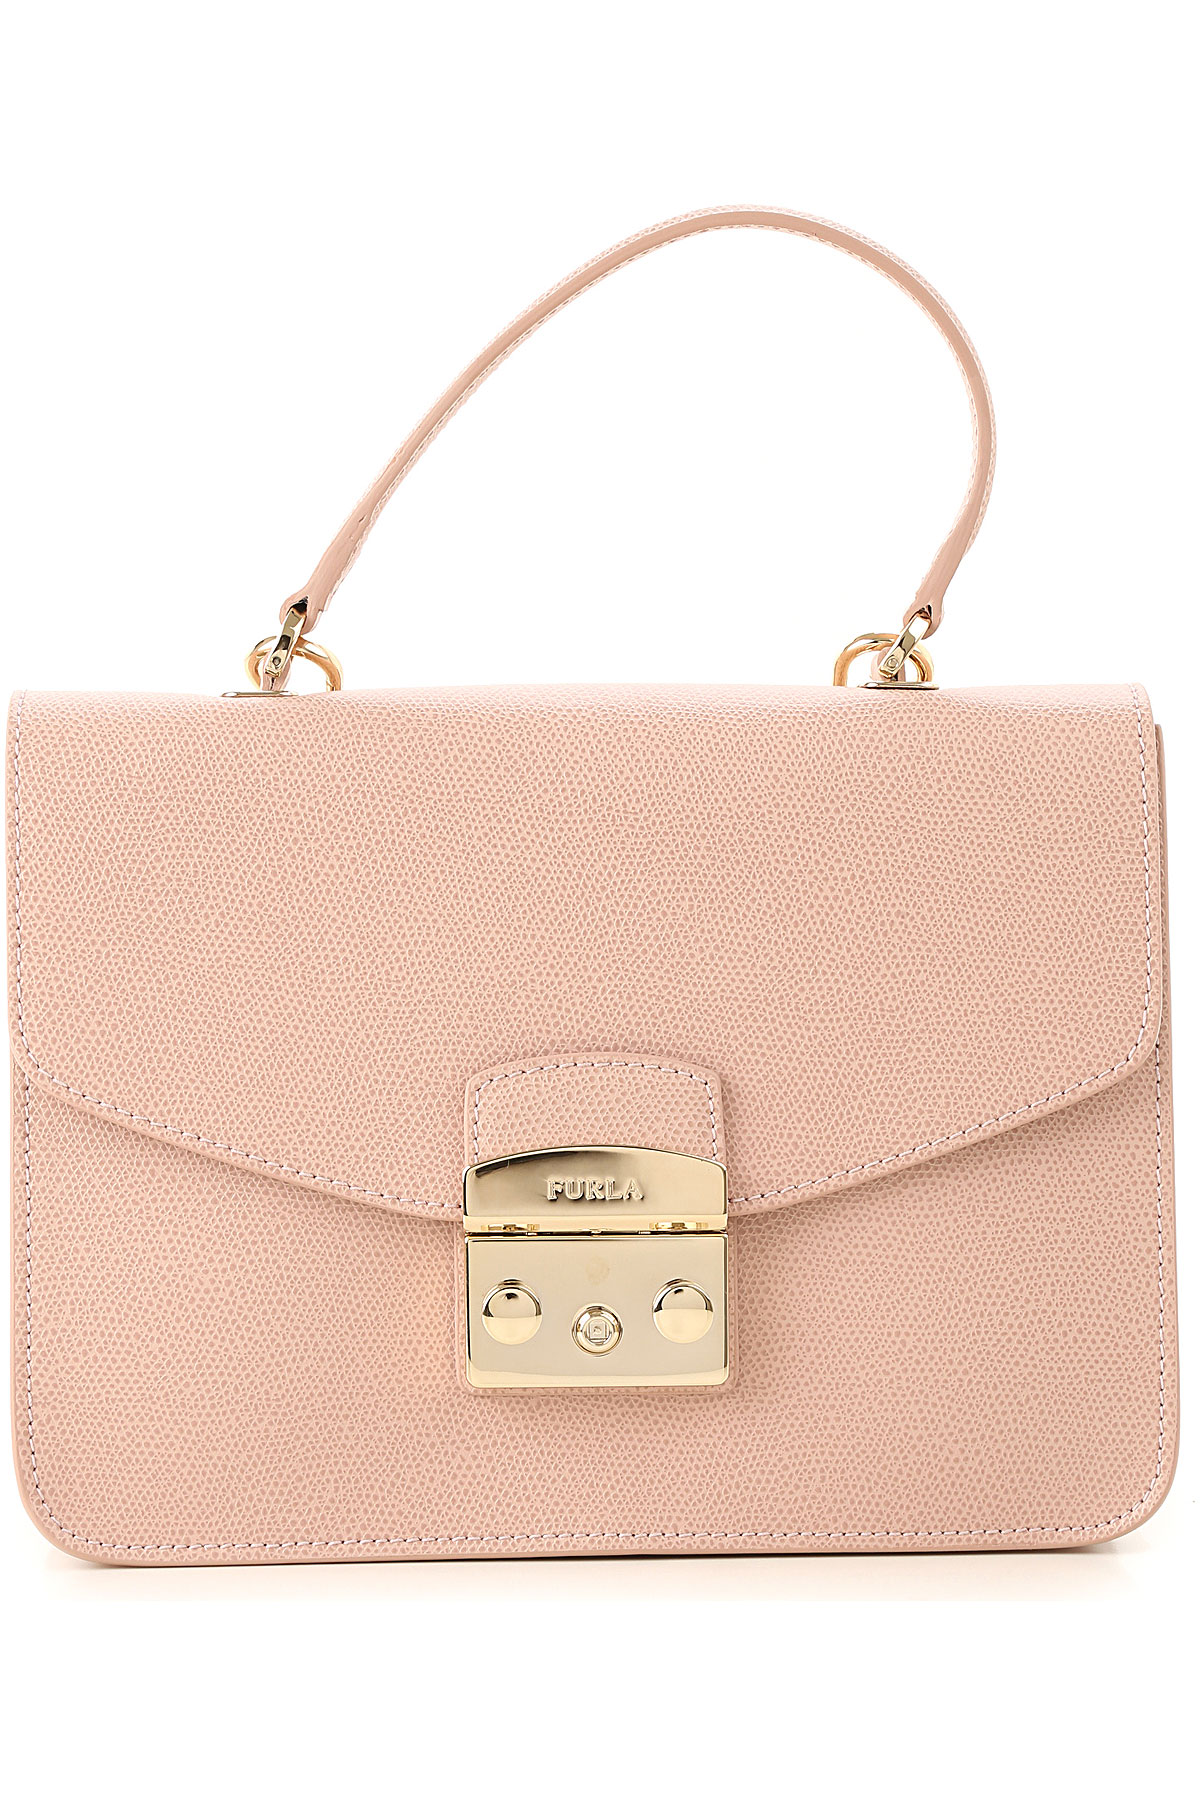 Handbags Furla, Style code: 948624-moonstone-